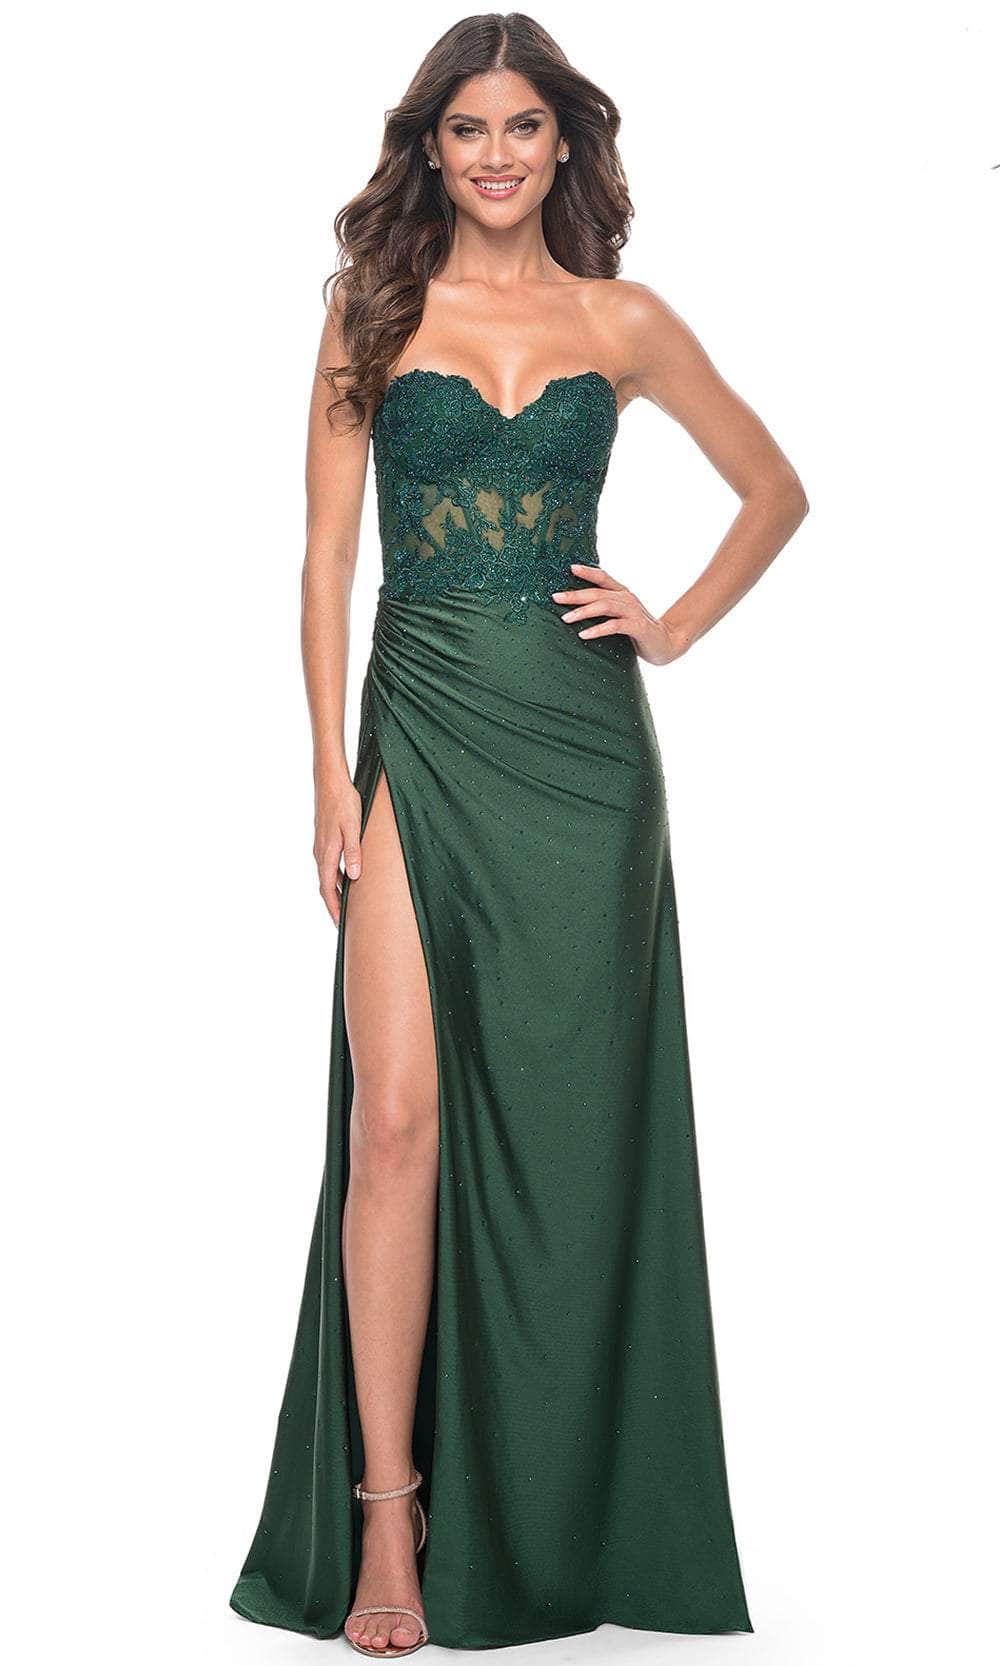 La Femme 32011 - Rhinestone Jersey Prom Dress
